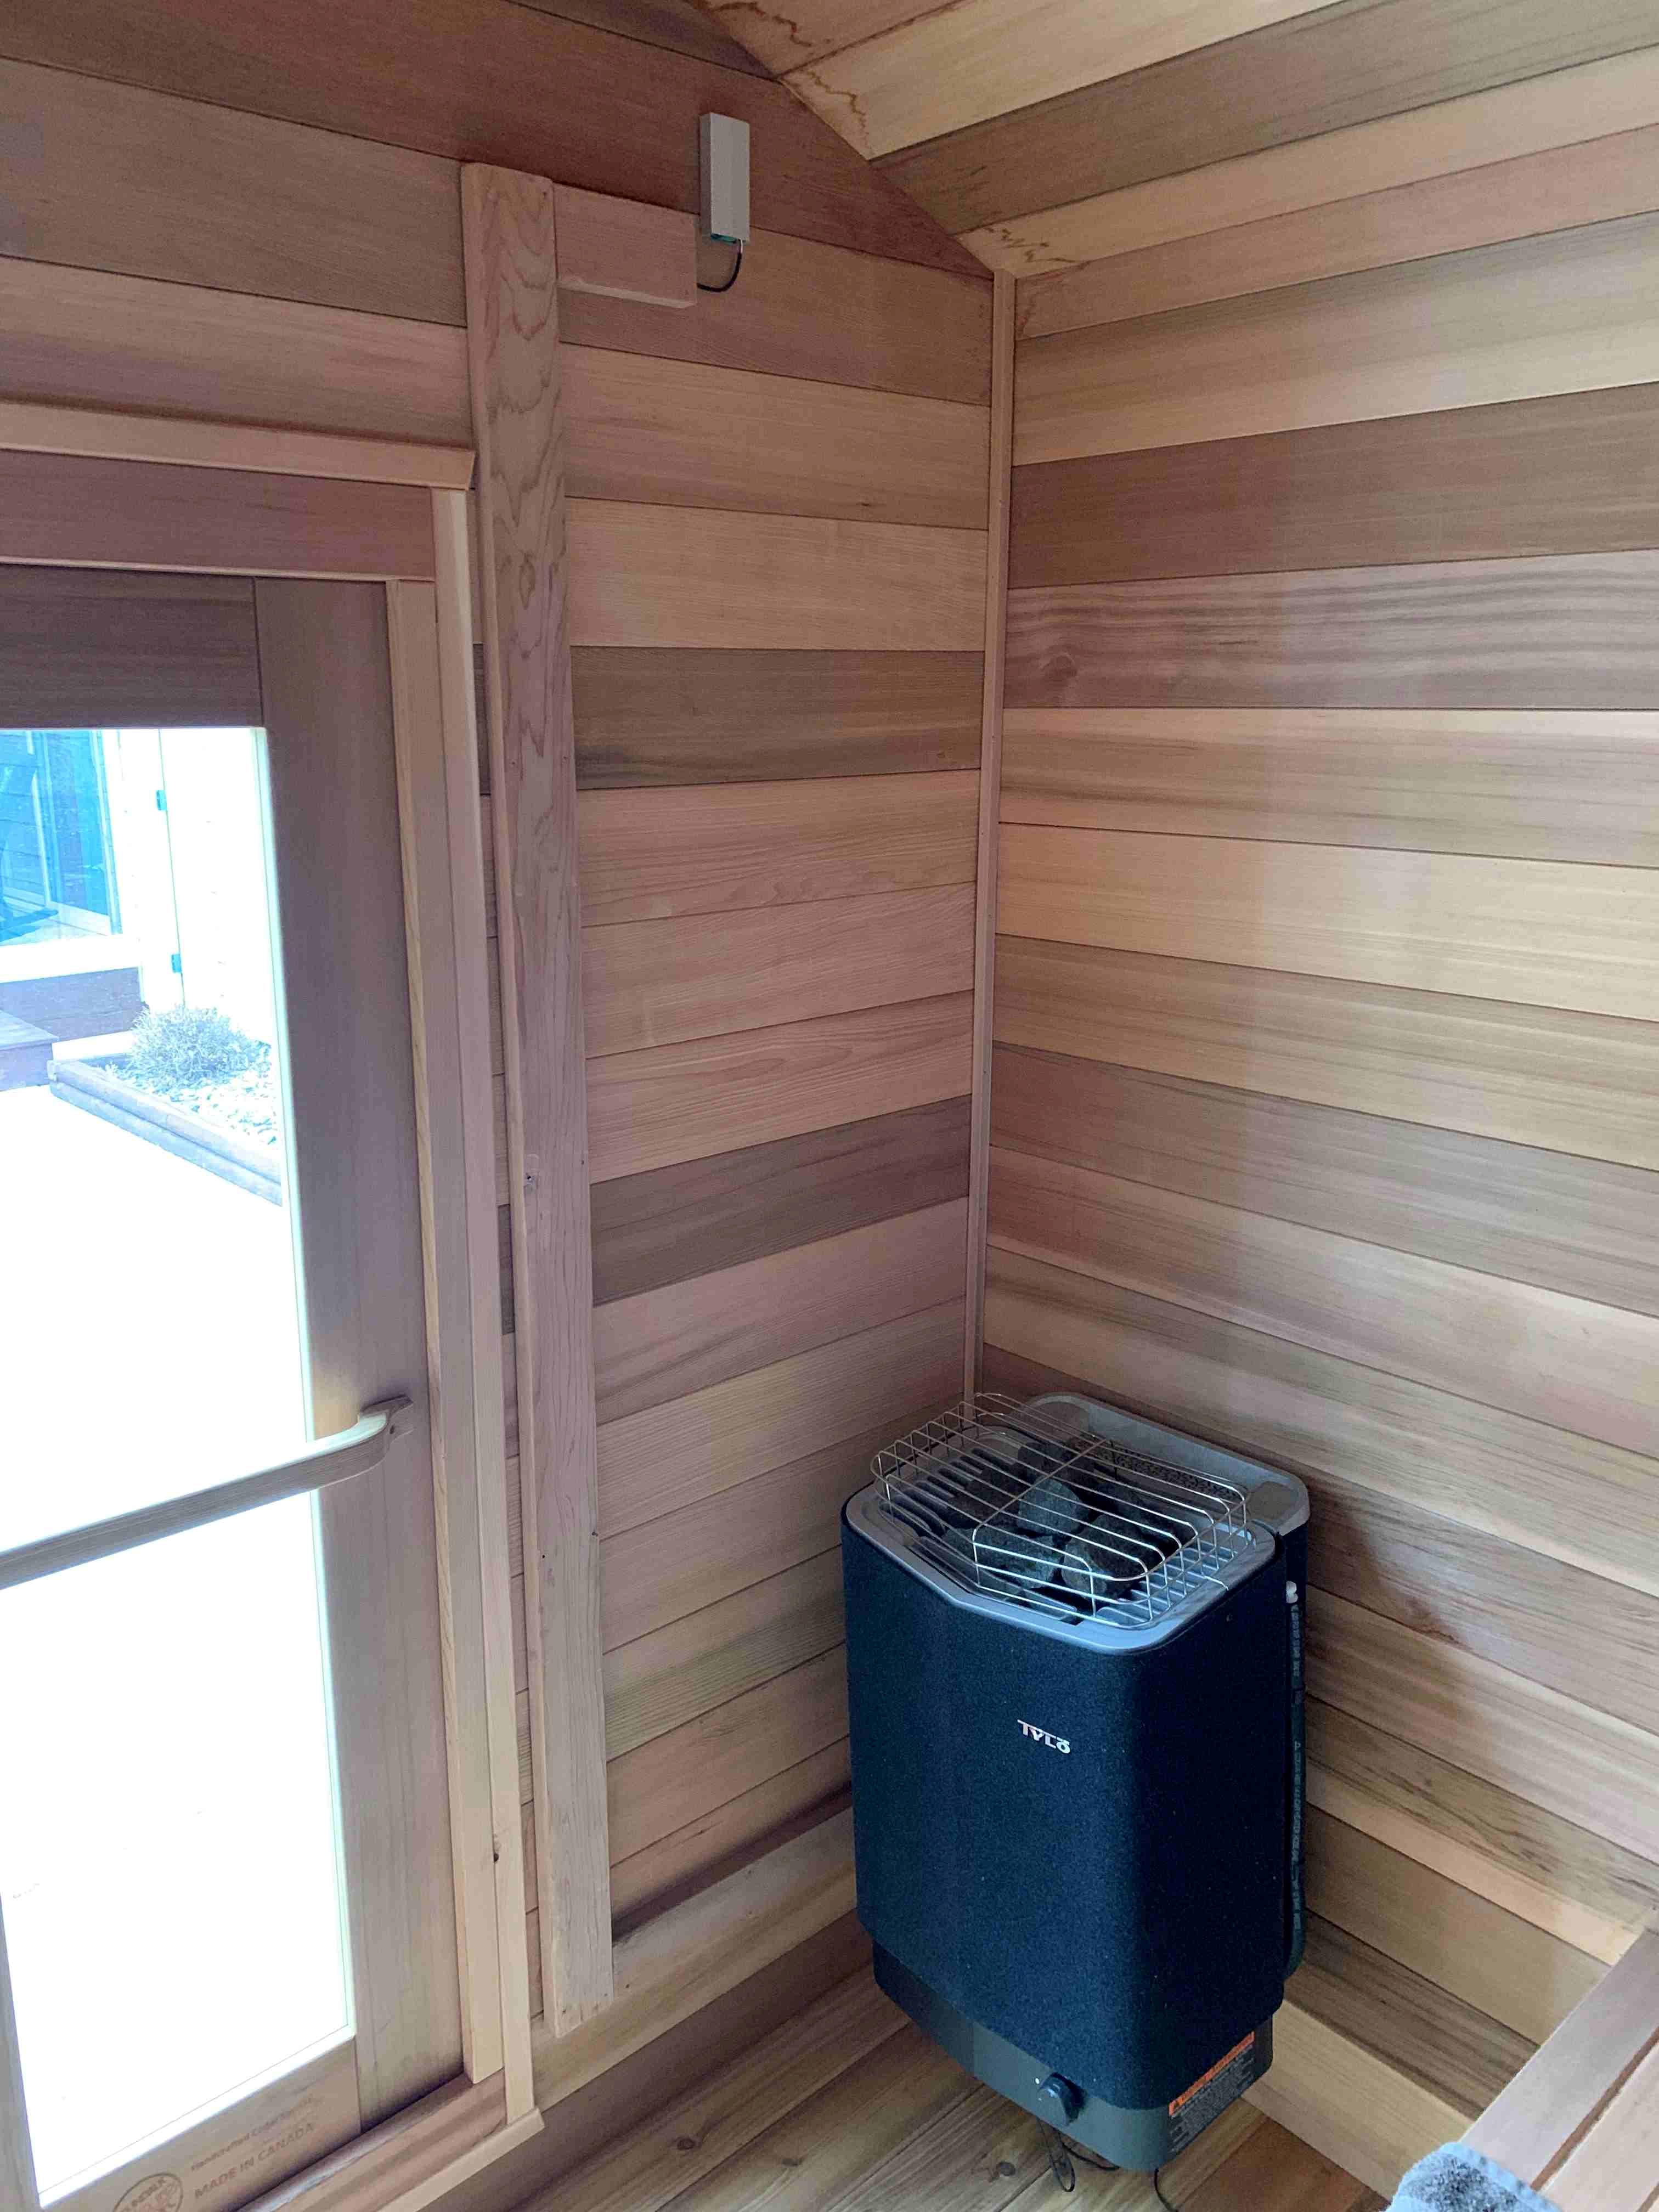 prefab sauna heater by tylo